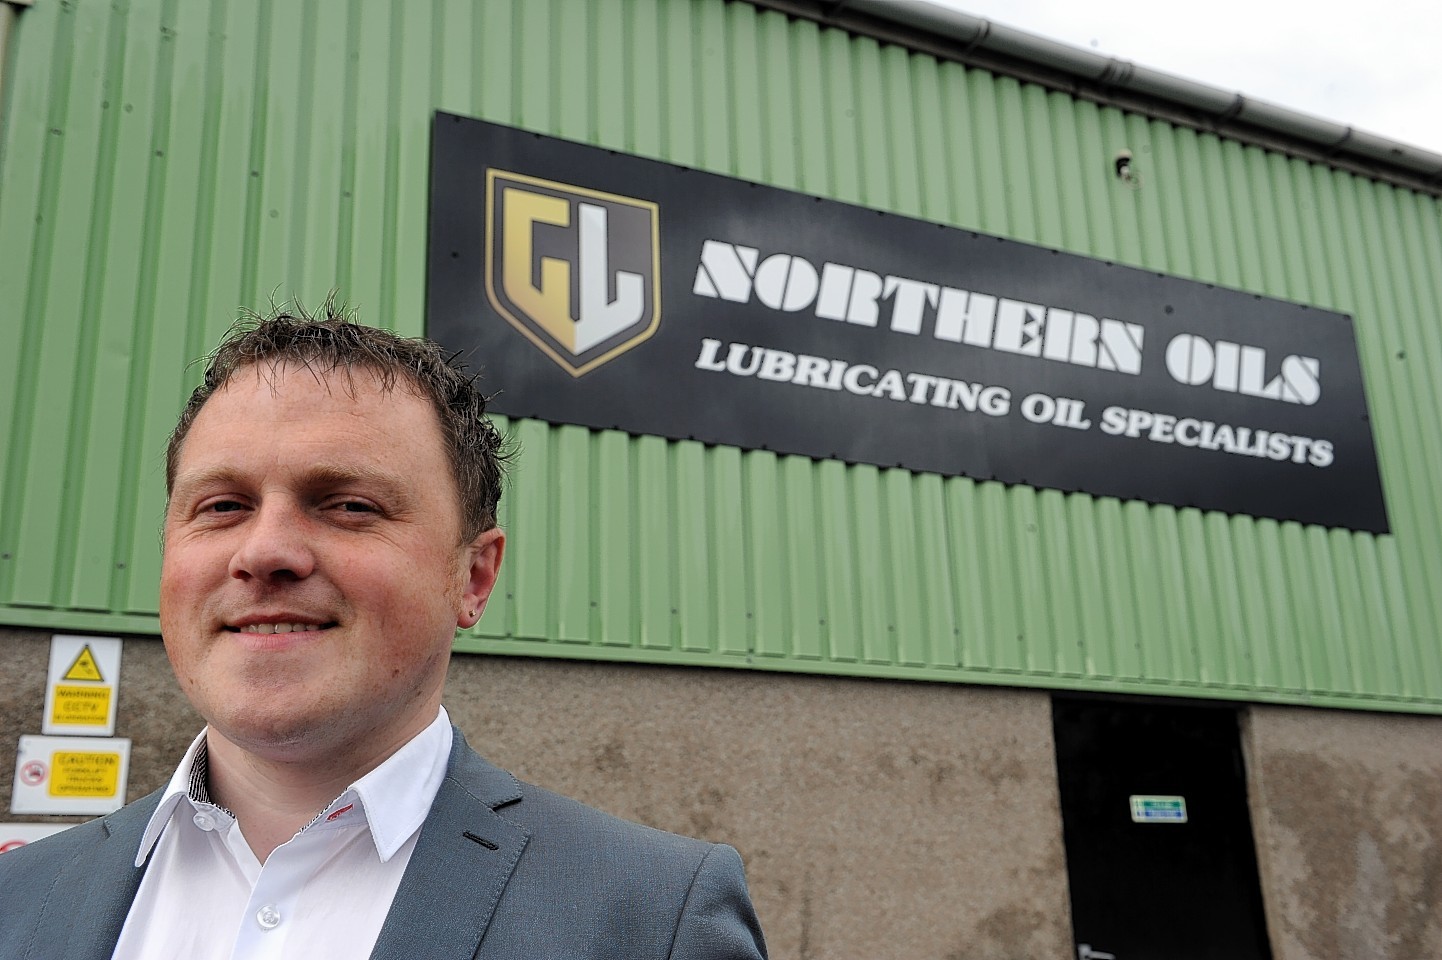 Northern Oils director, David Wood